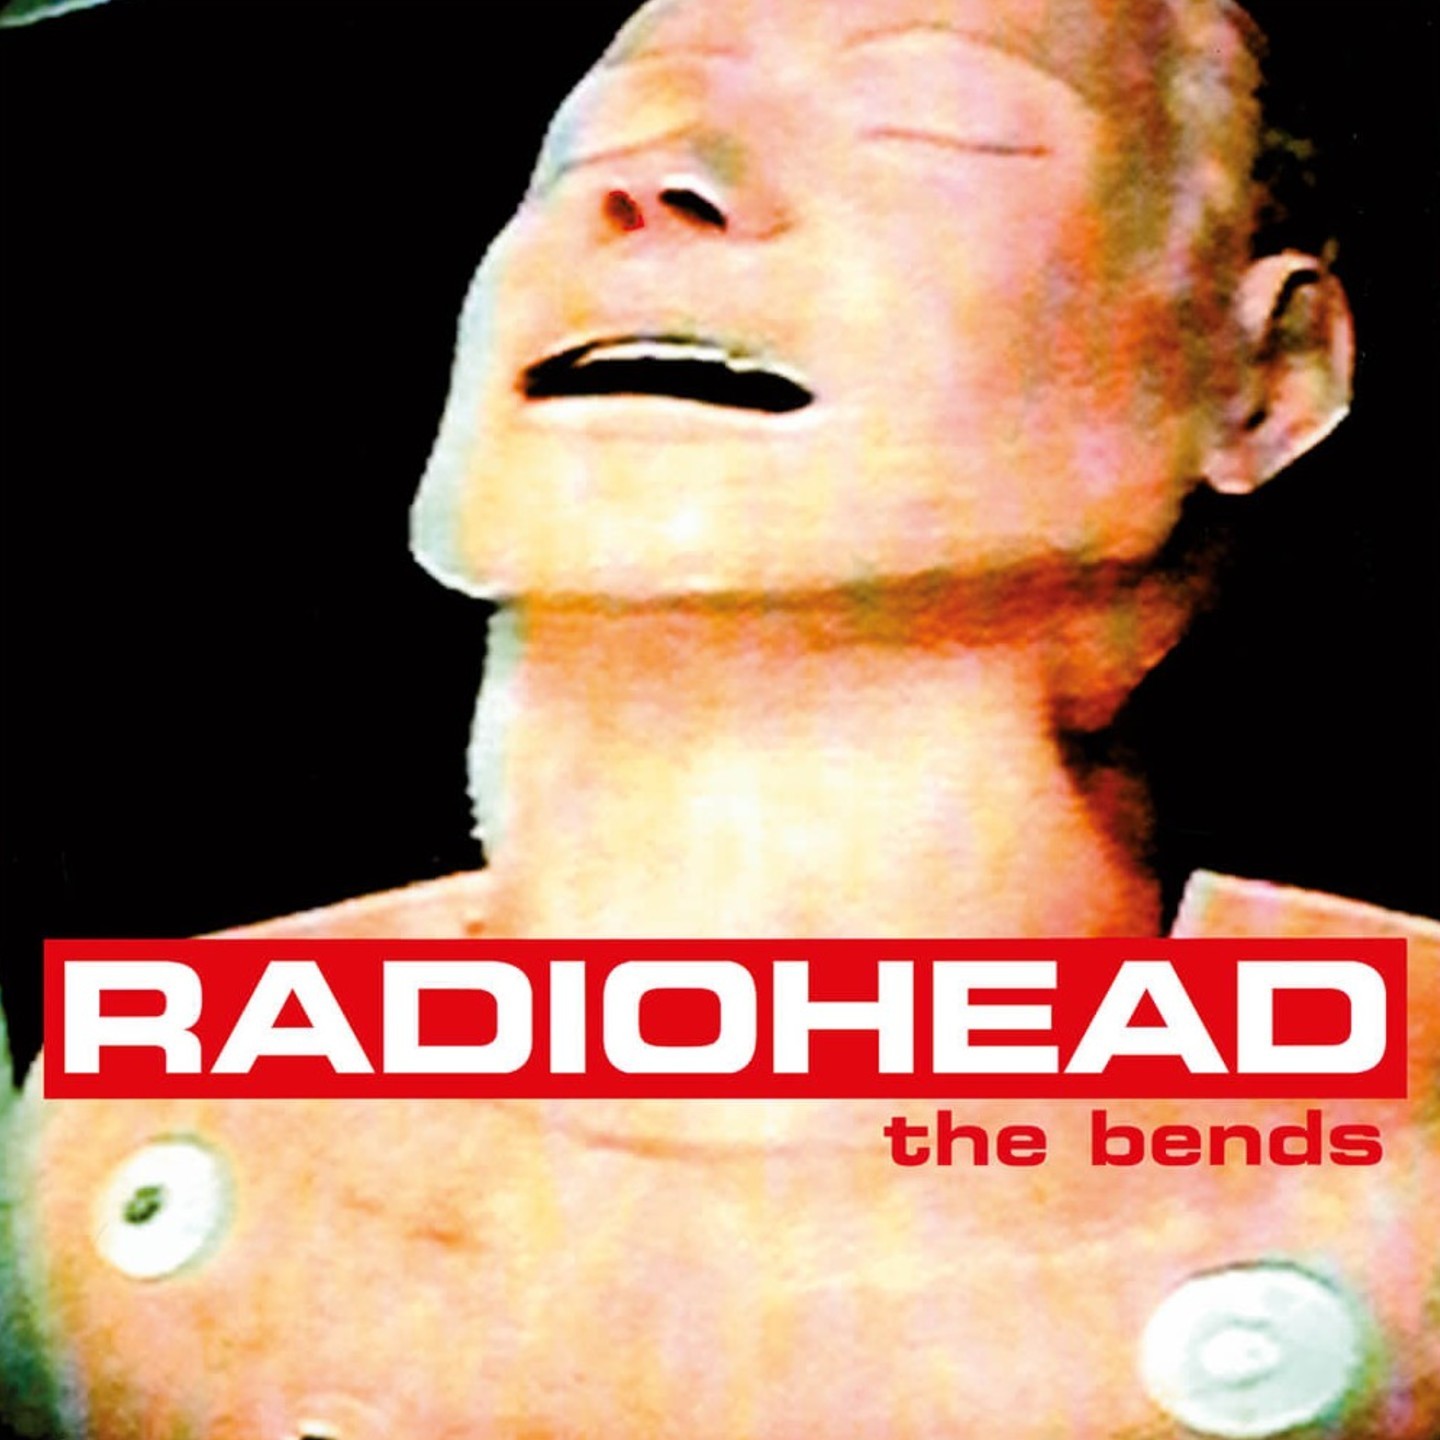 RADIOHEAD - The Bends LP 180gram vinyl